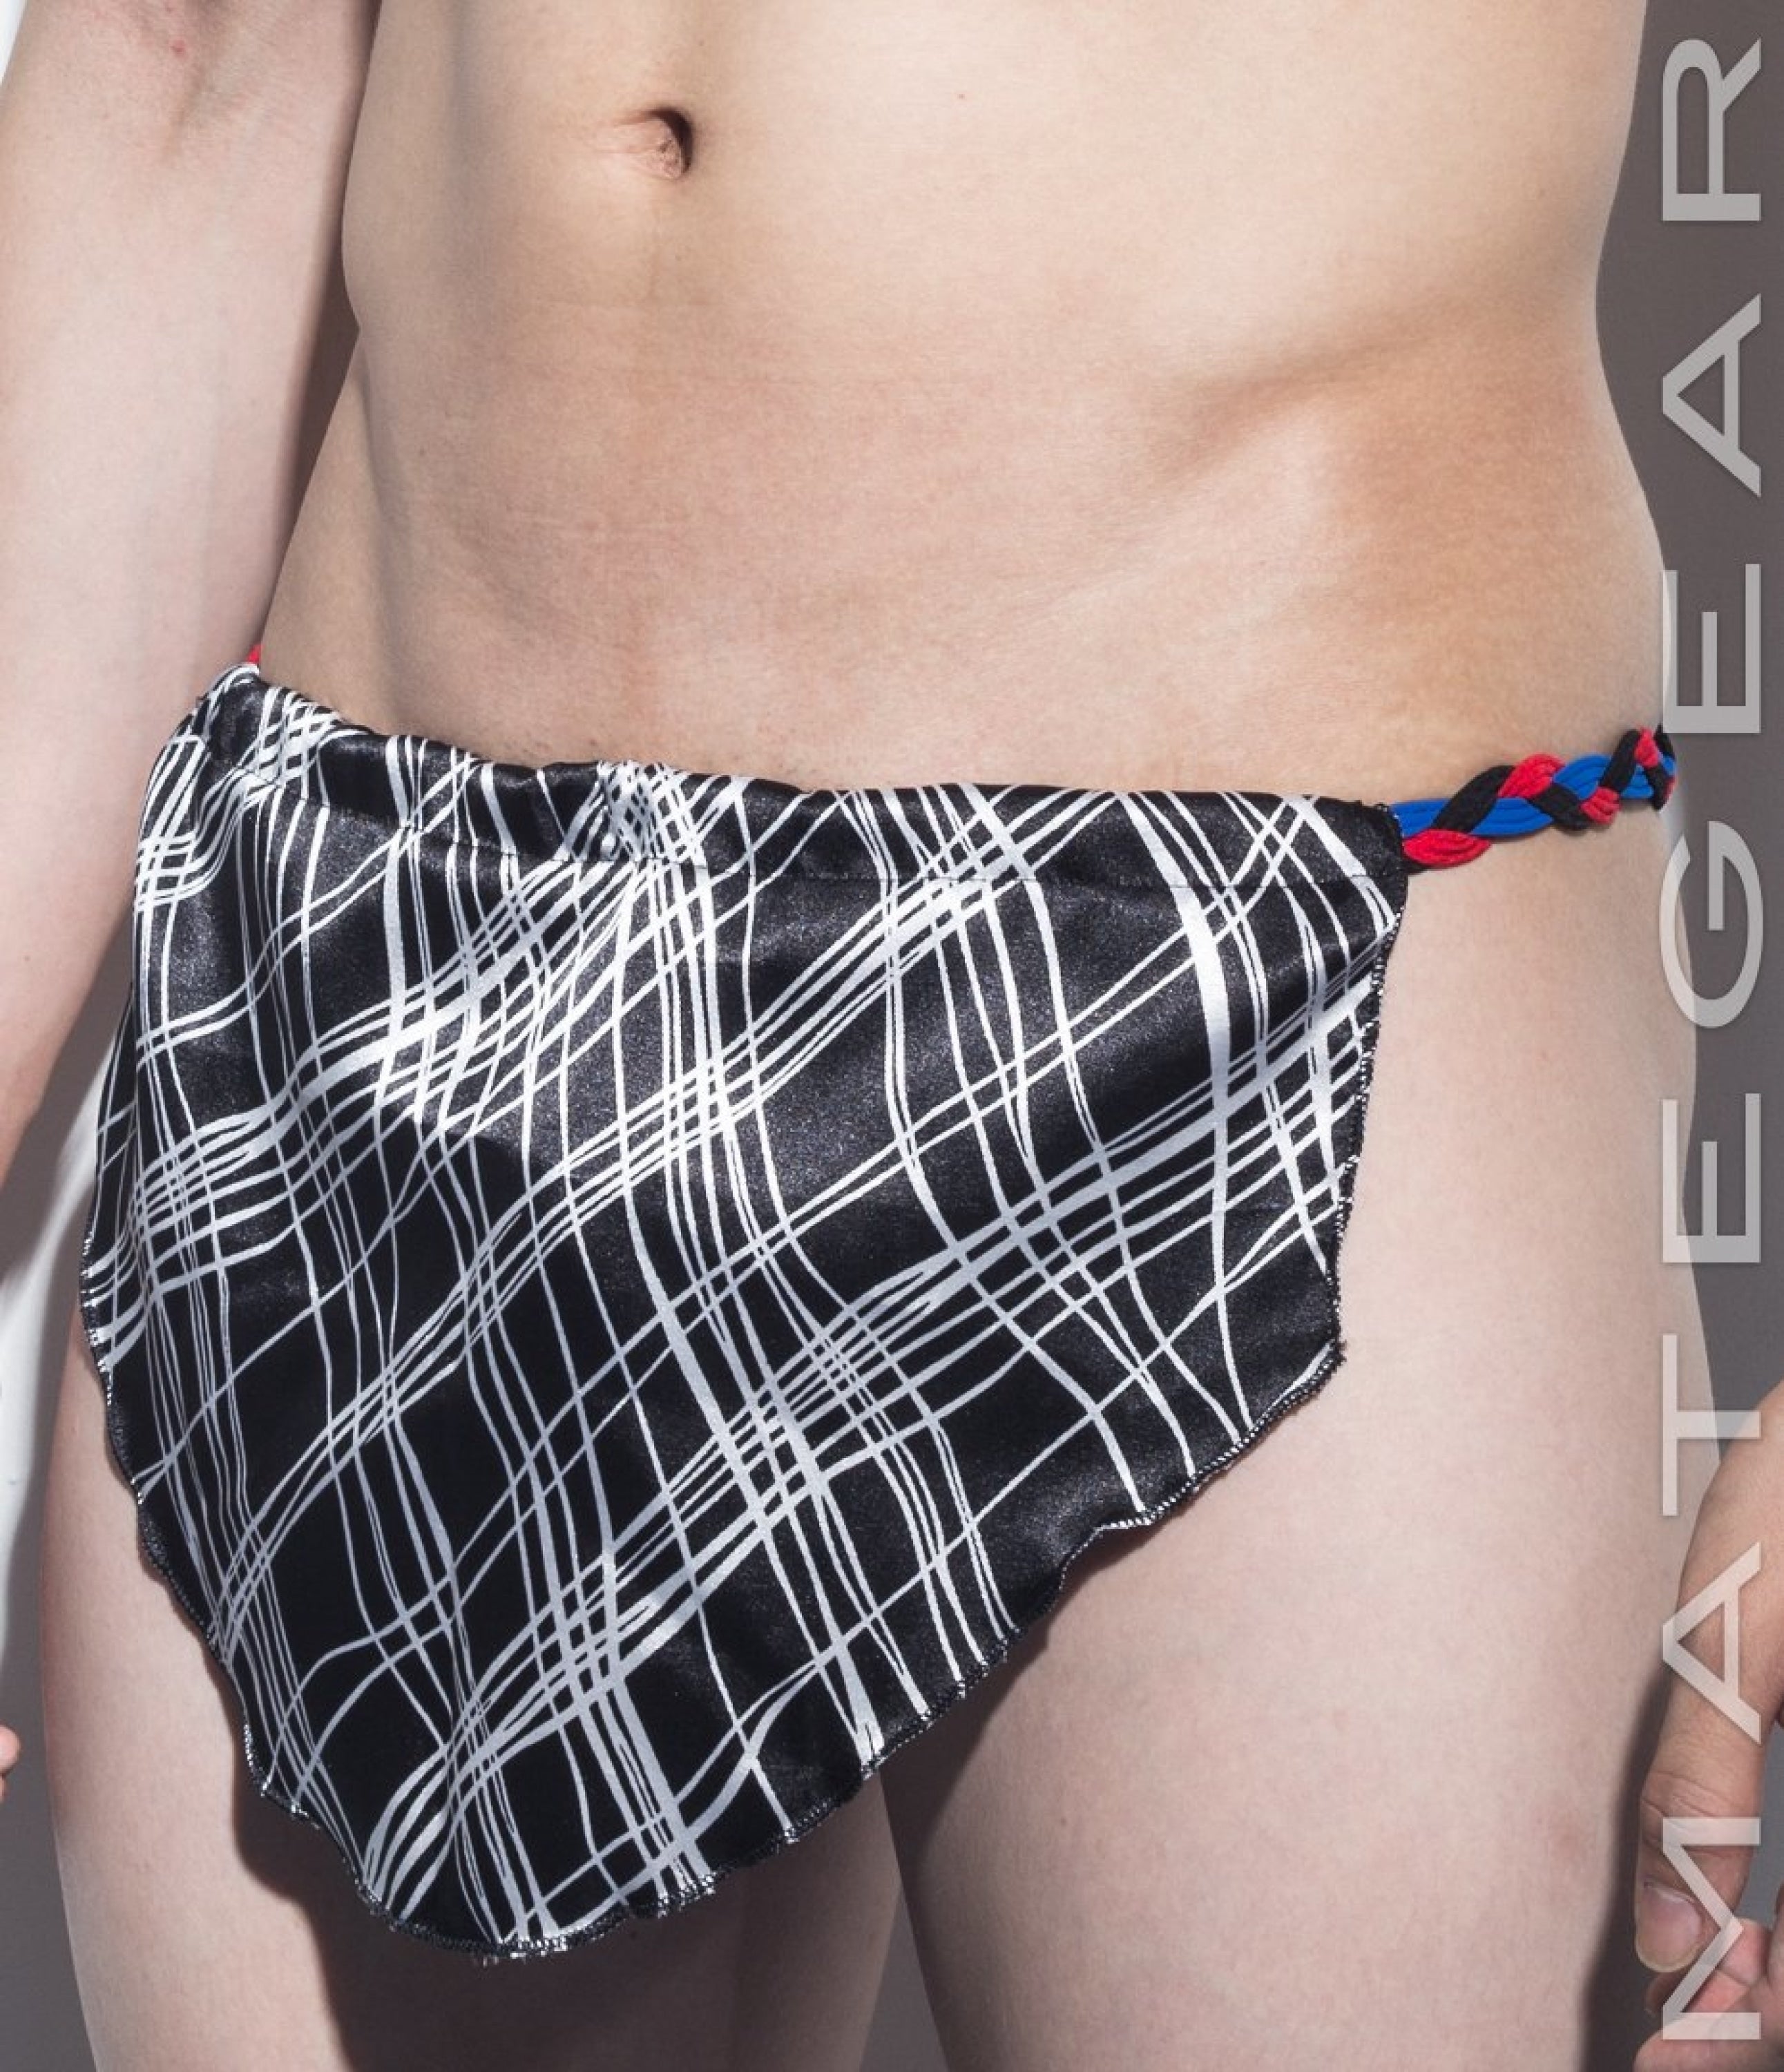 Sexy Men's Underwear Extreme Xpression Bikini - Po Dae (Black/Red/Blue Braided Band) - MATEGEAR - Sexy Men's Swimwear, Underwear, Sportswear and Loungewear